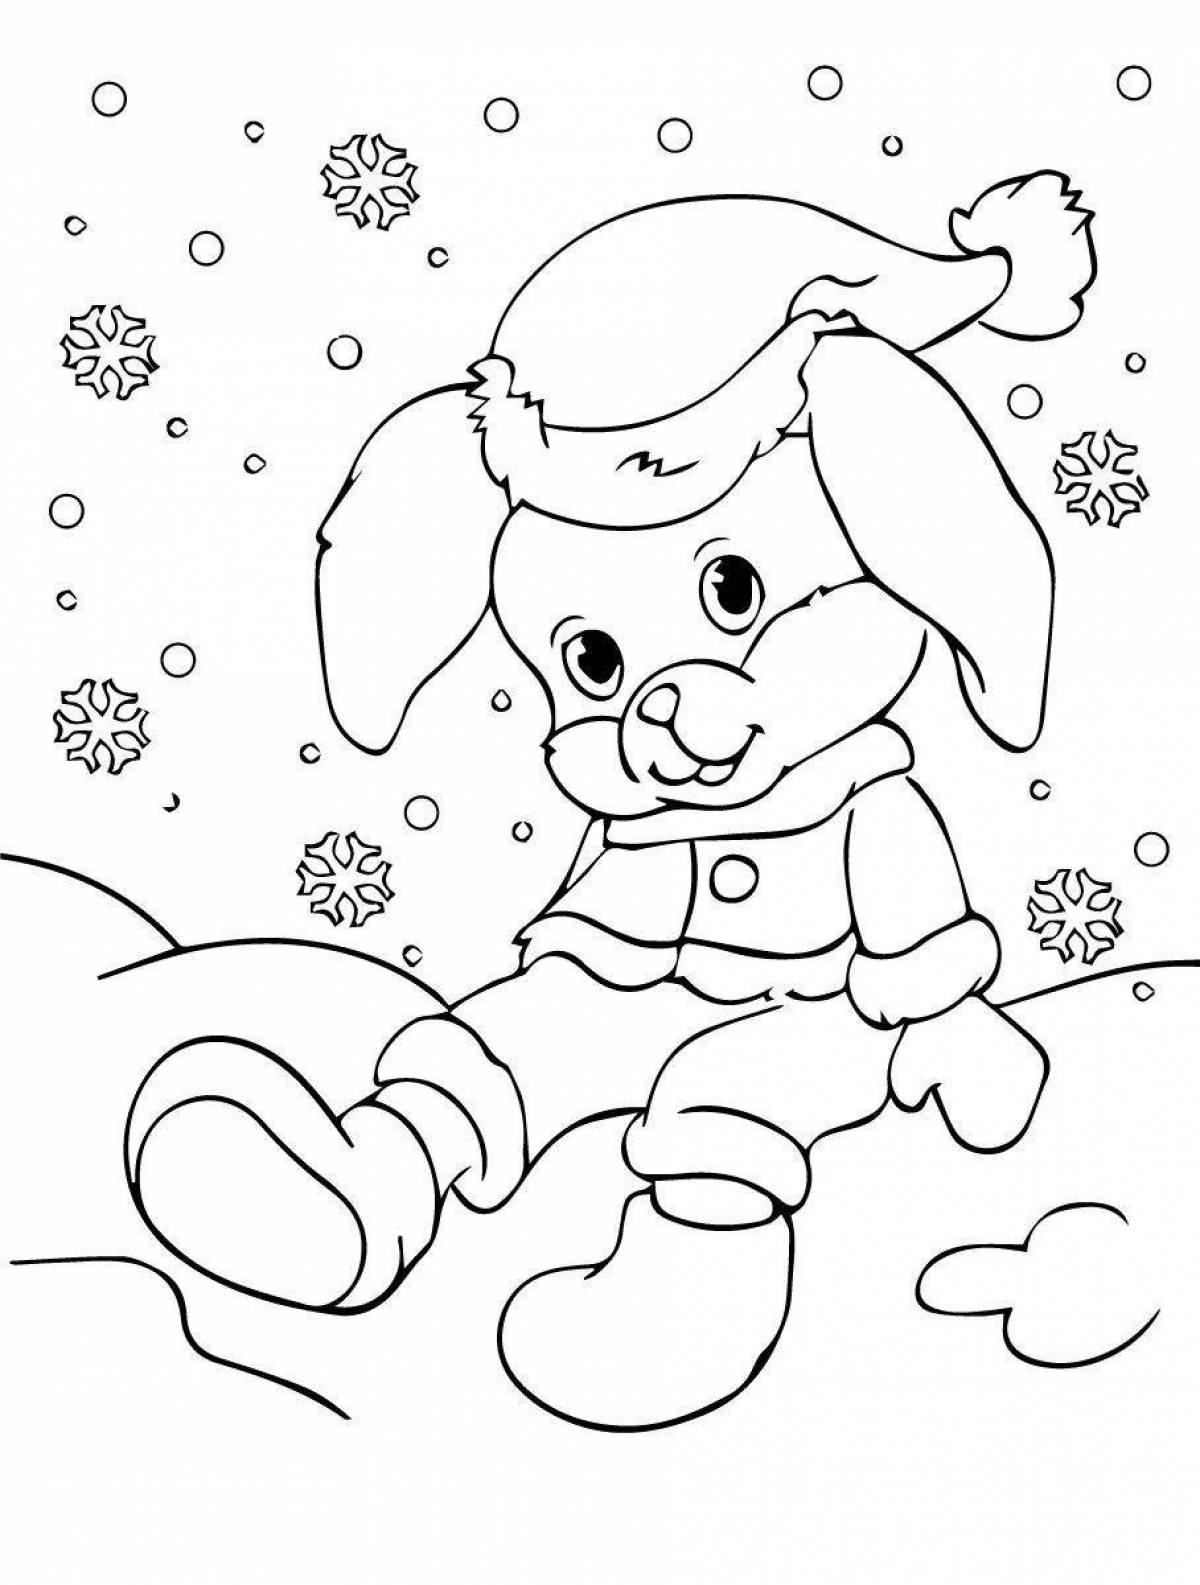 Amazing Christmas bunny coloring book